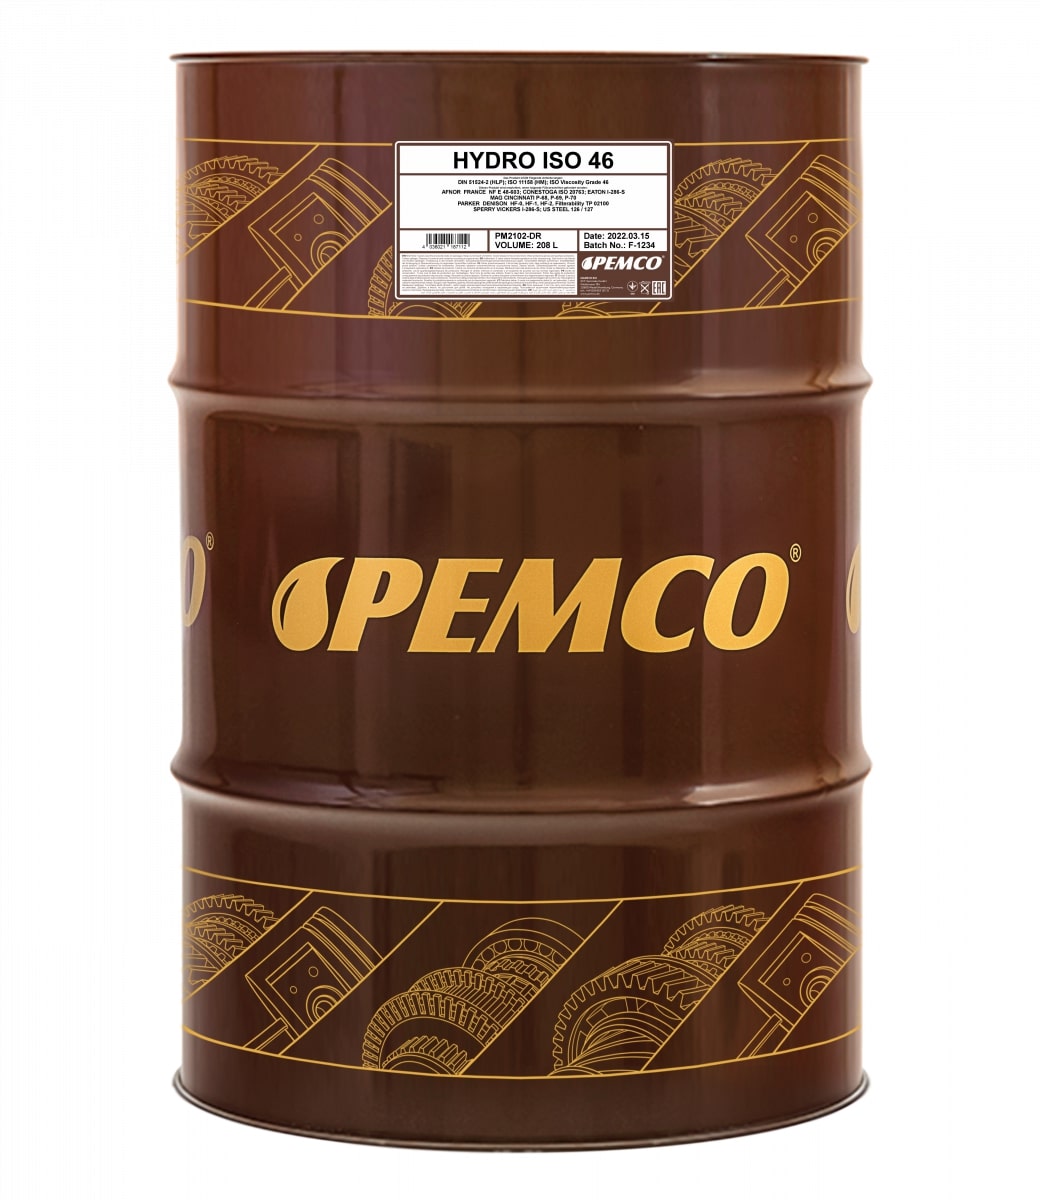  PEMCO Hydro ISO 46